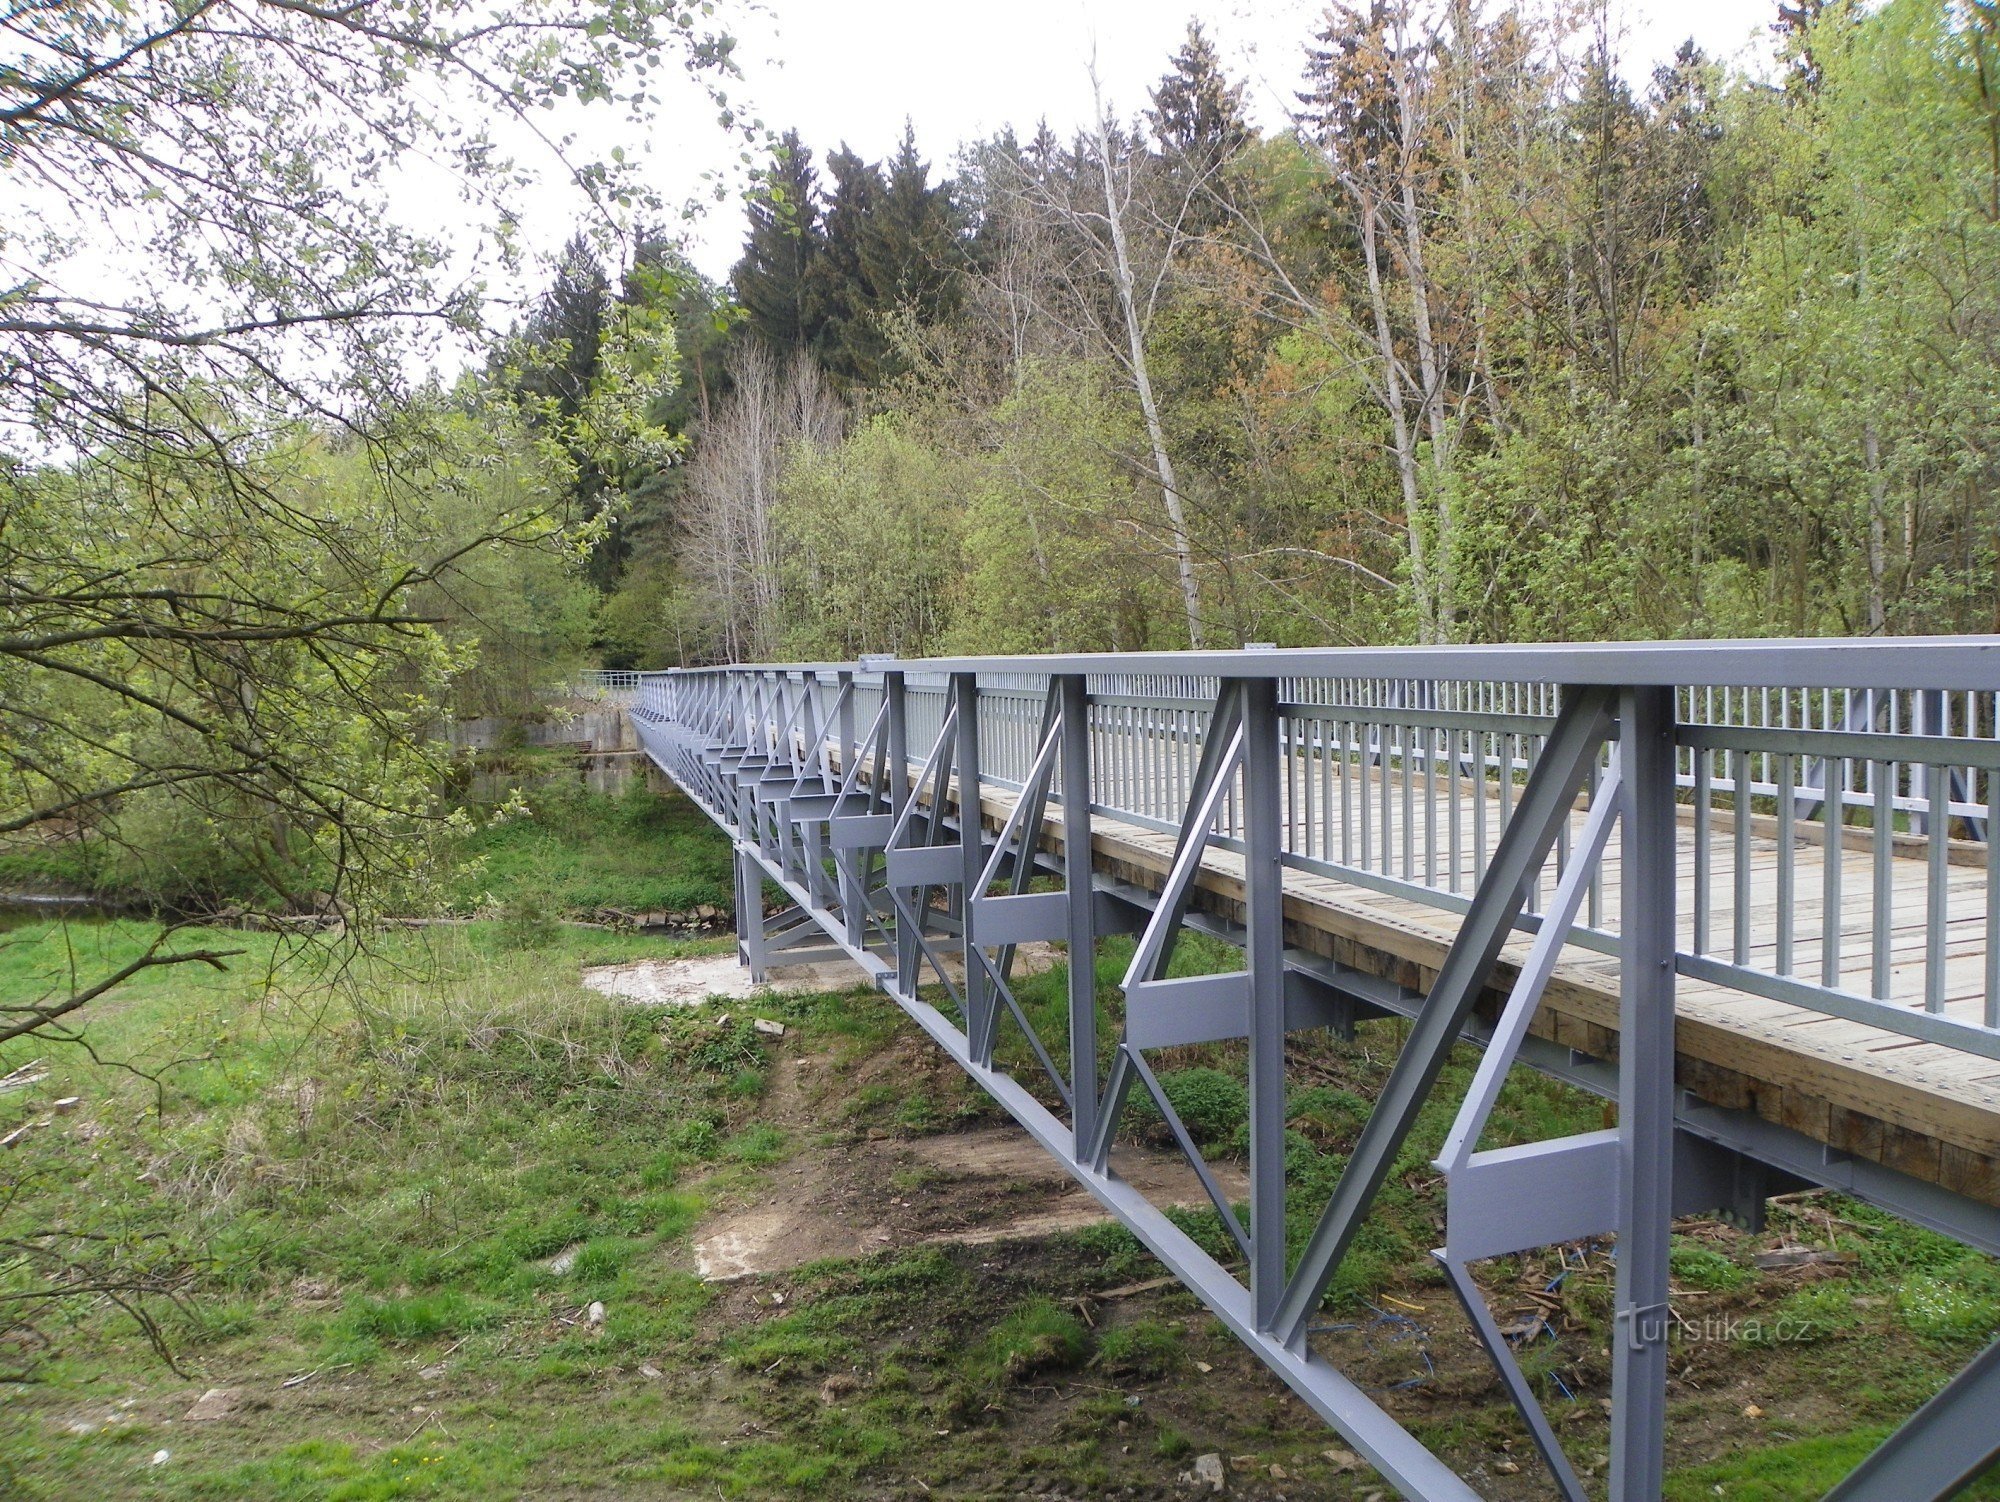 New bridge on the cycle path